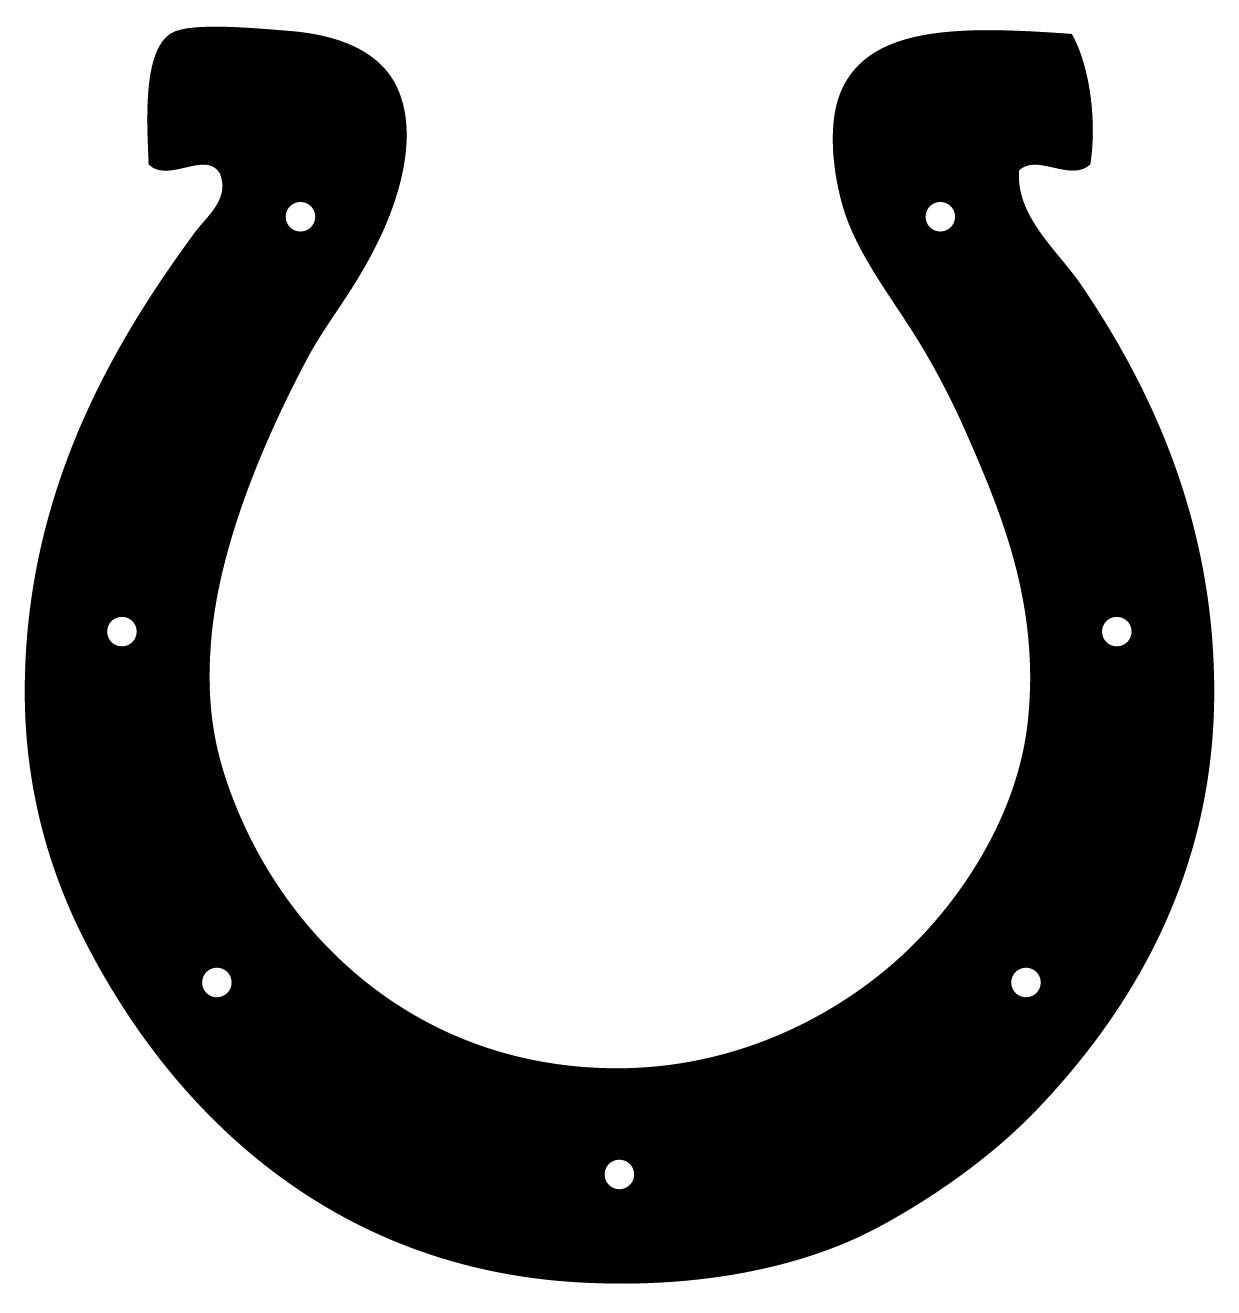 Vector horseshoe clipart